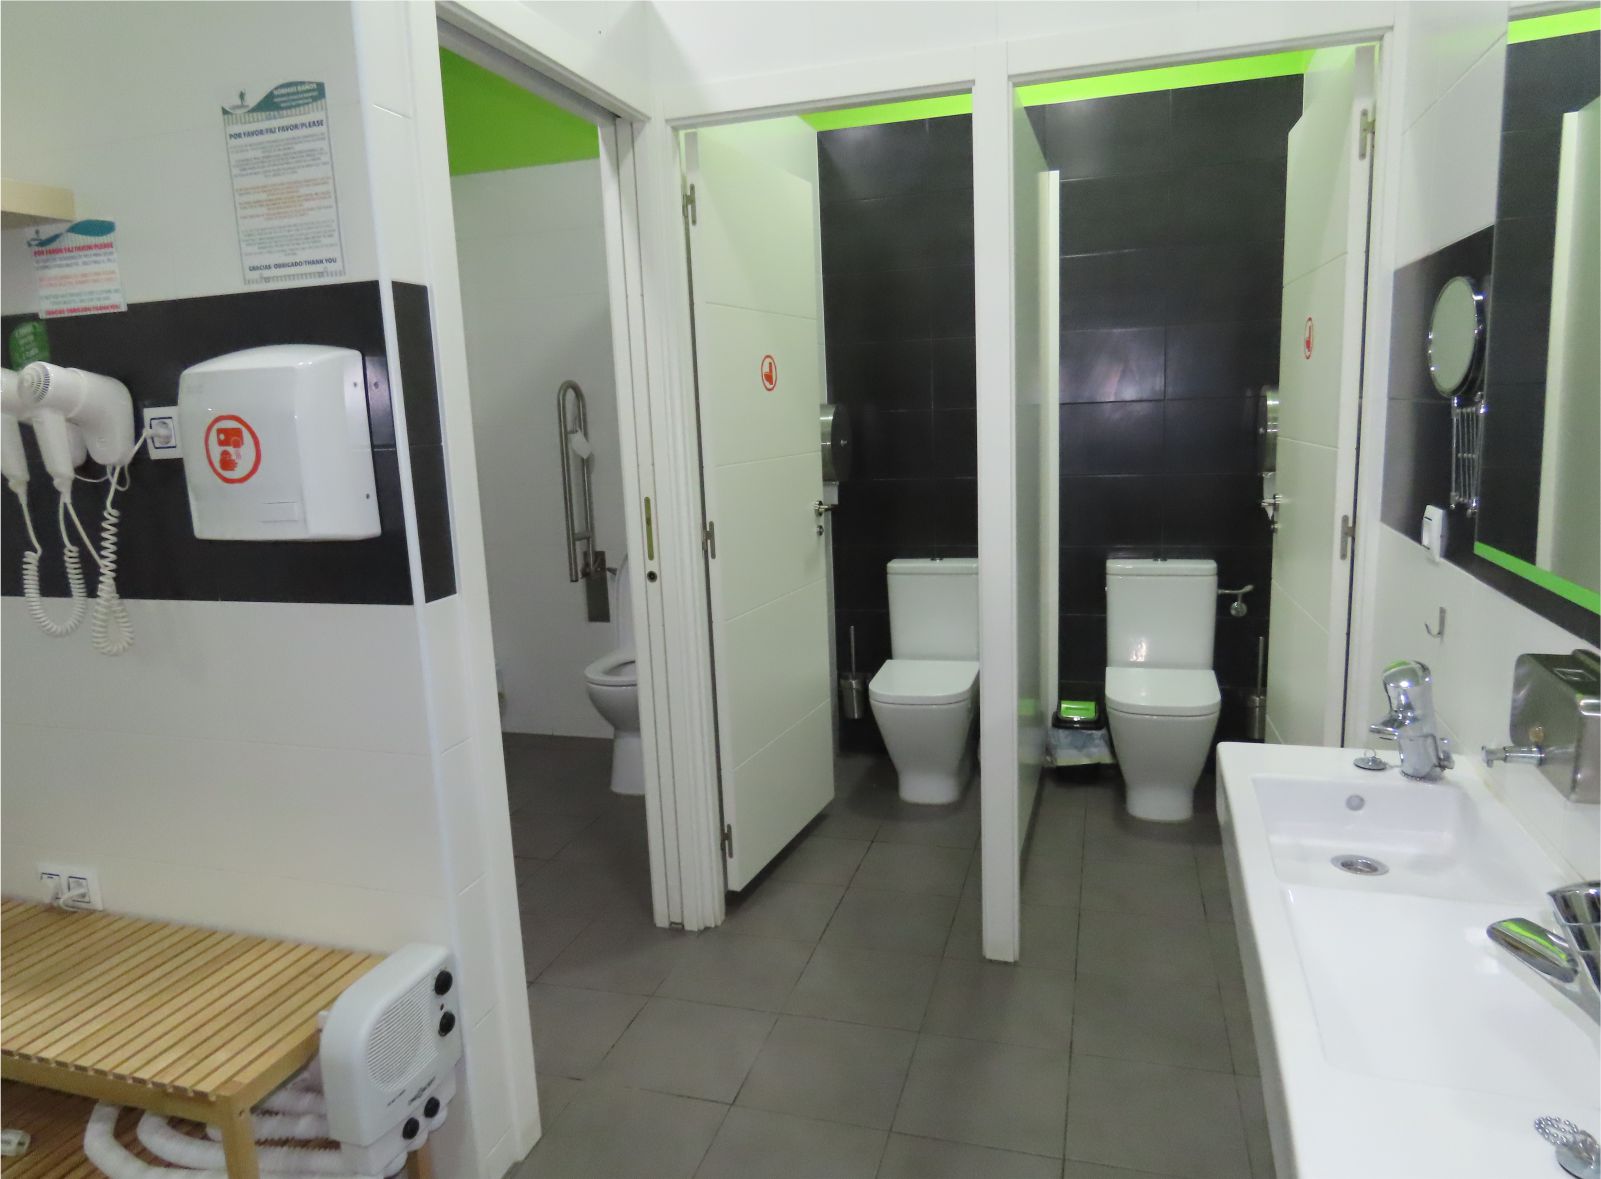 Cuarto de Baño - Bathroom - Albergue Corredoiras